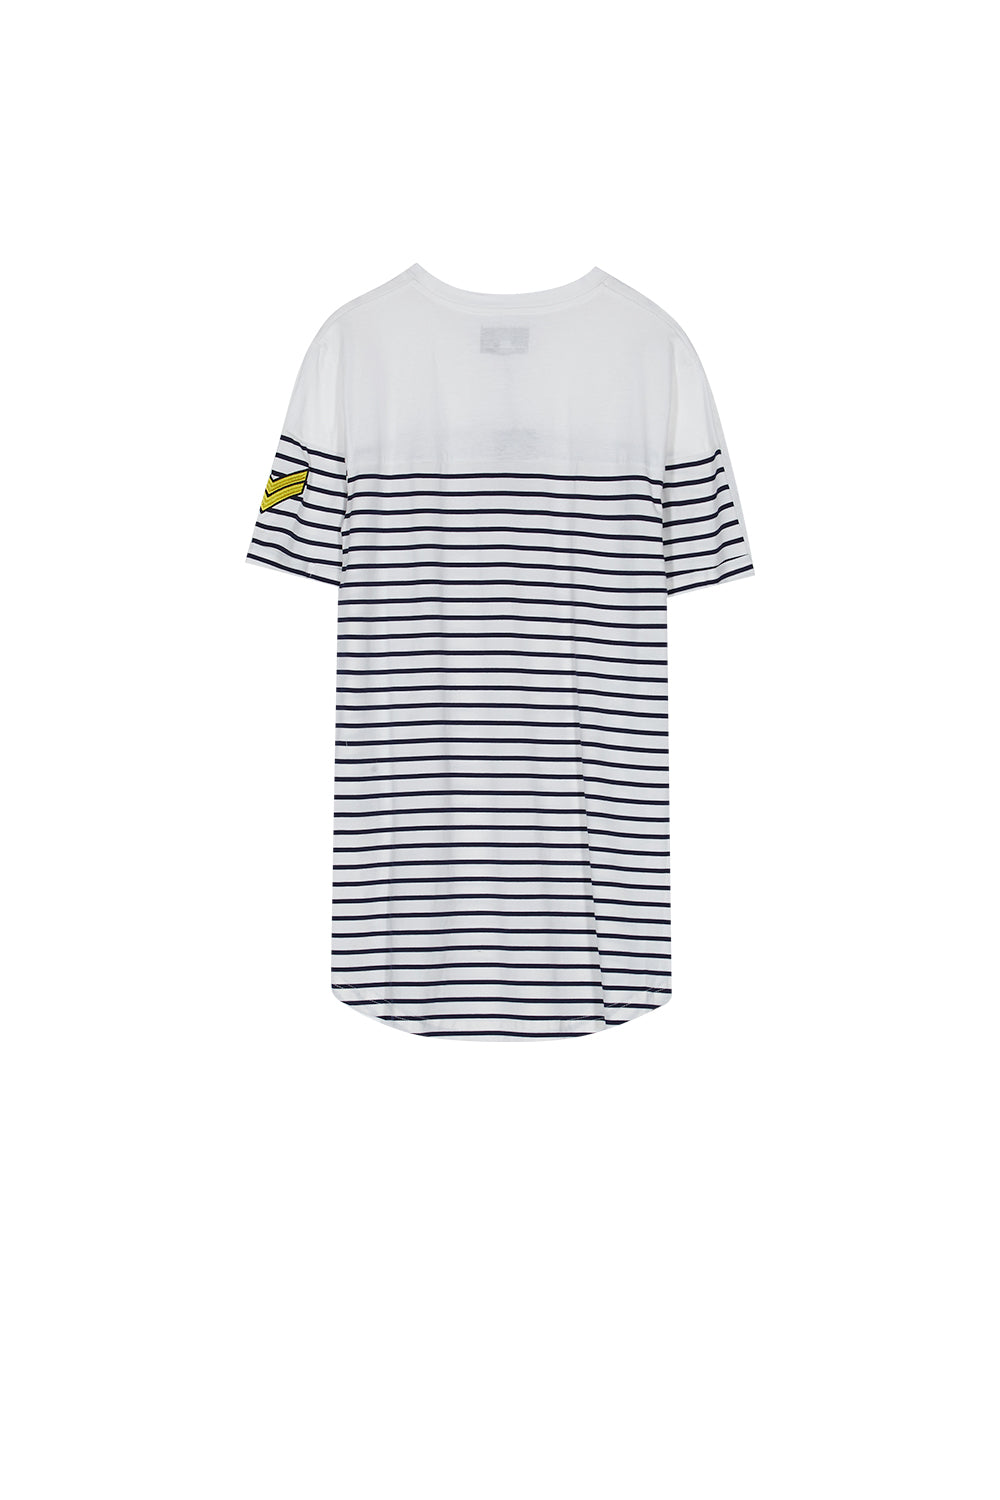 Sixth June - T-shirt marinière patch chevron bleu blanc